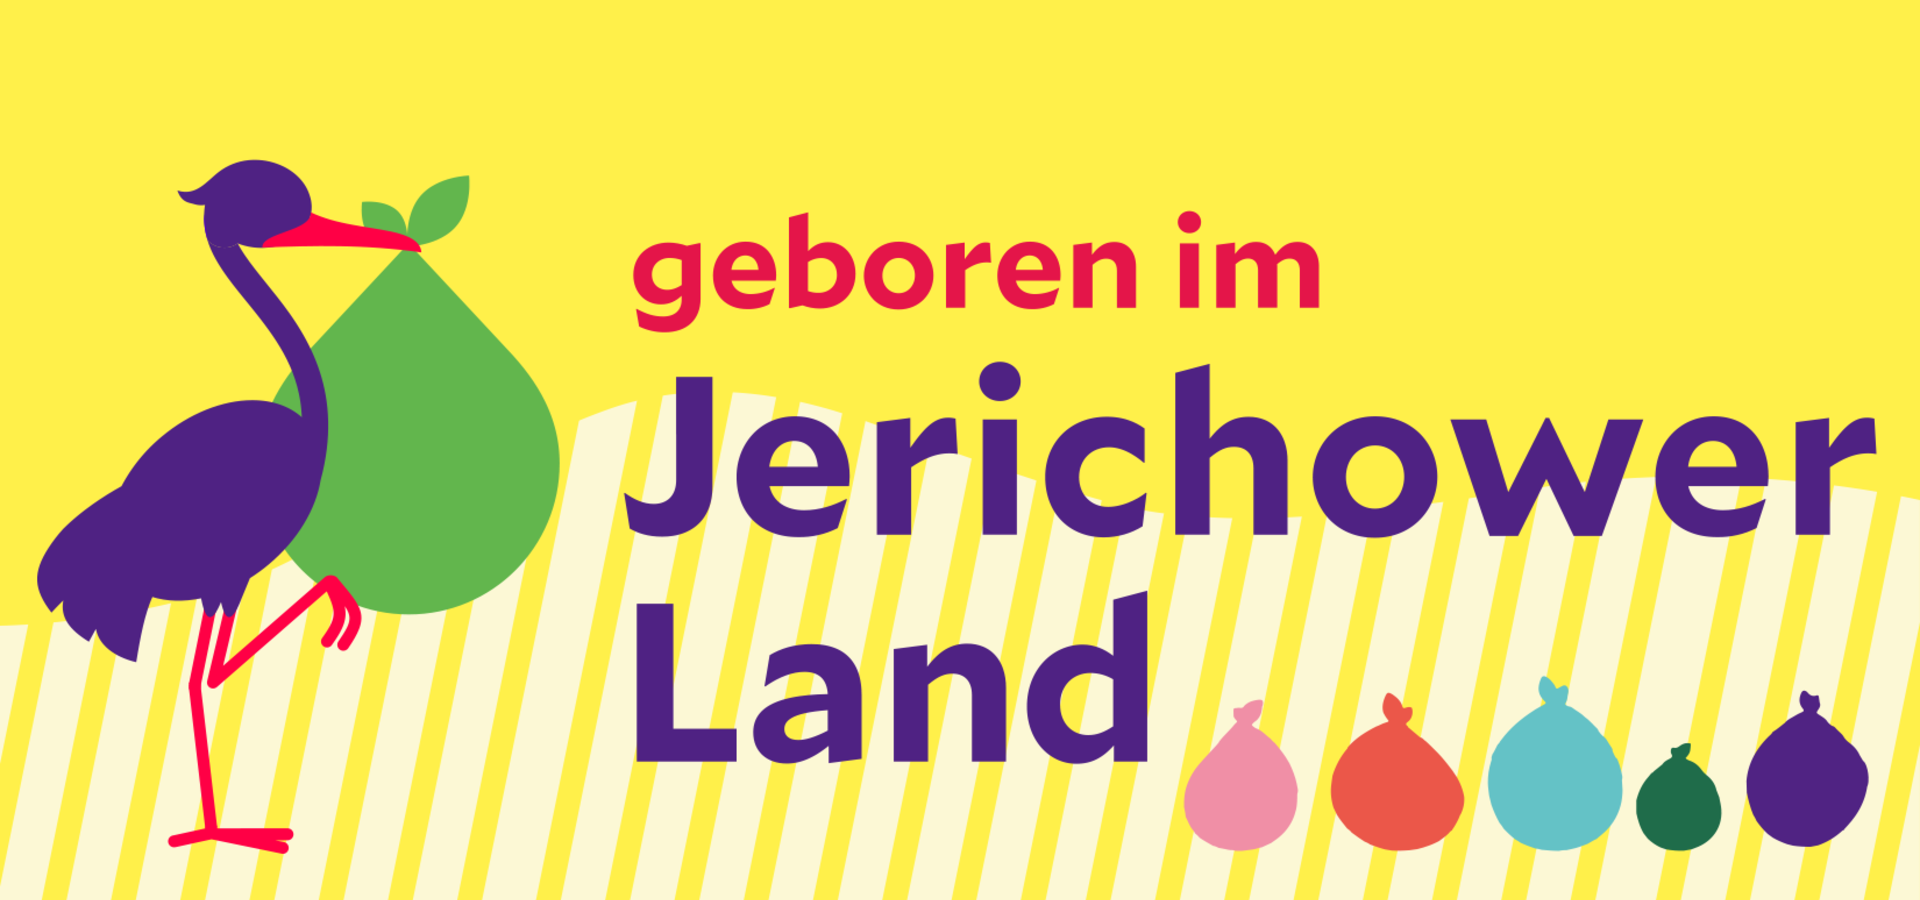 Corporate Design: Kampagnenmotiv "Geboren im Jerichower Land"